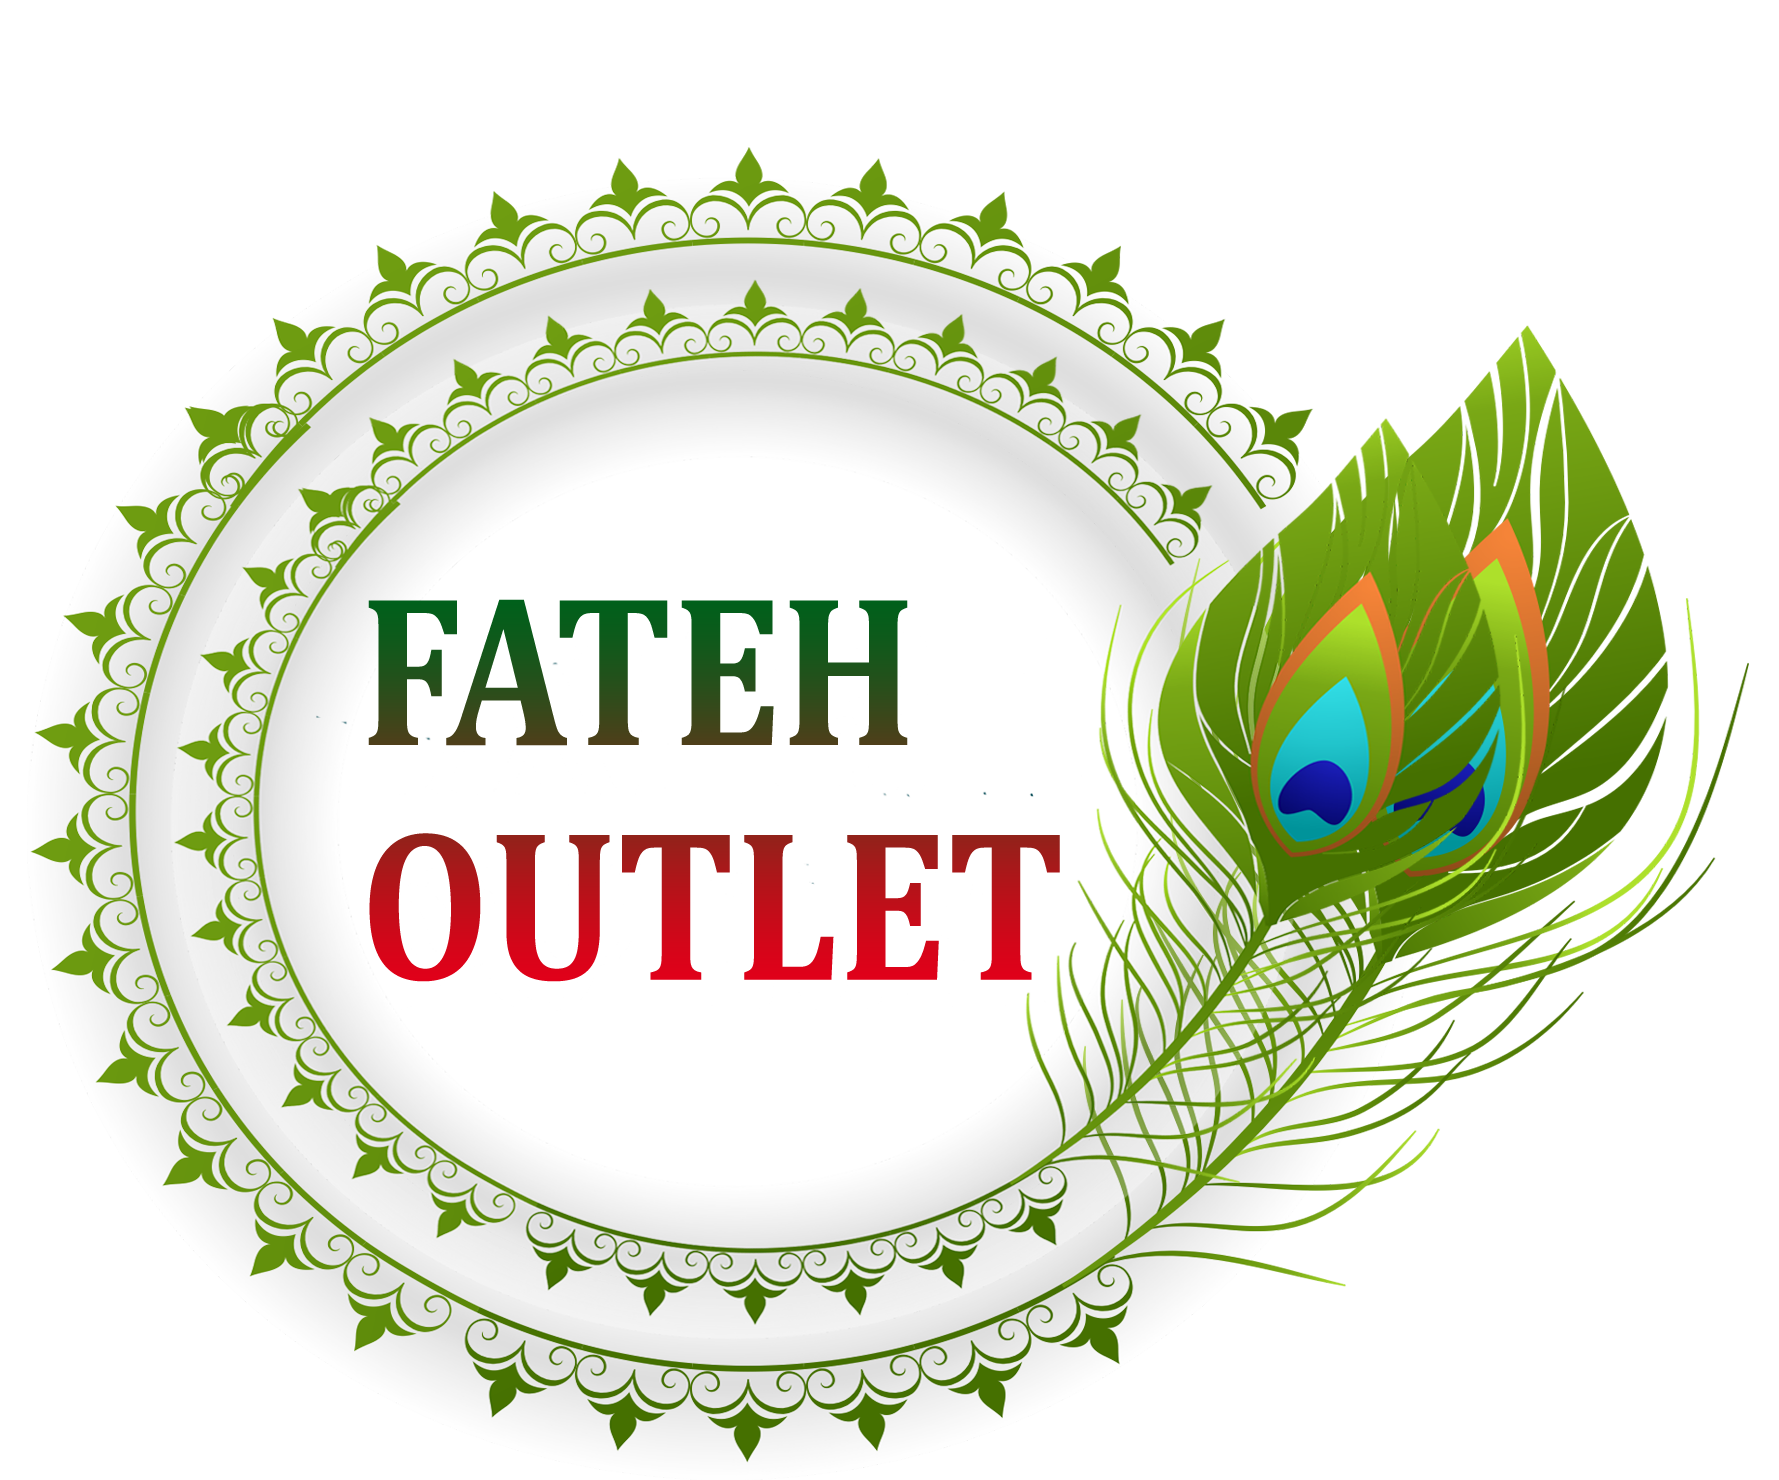 Fateh Outlet logo